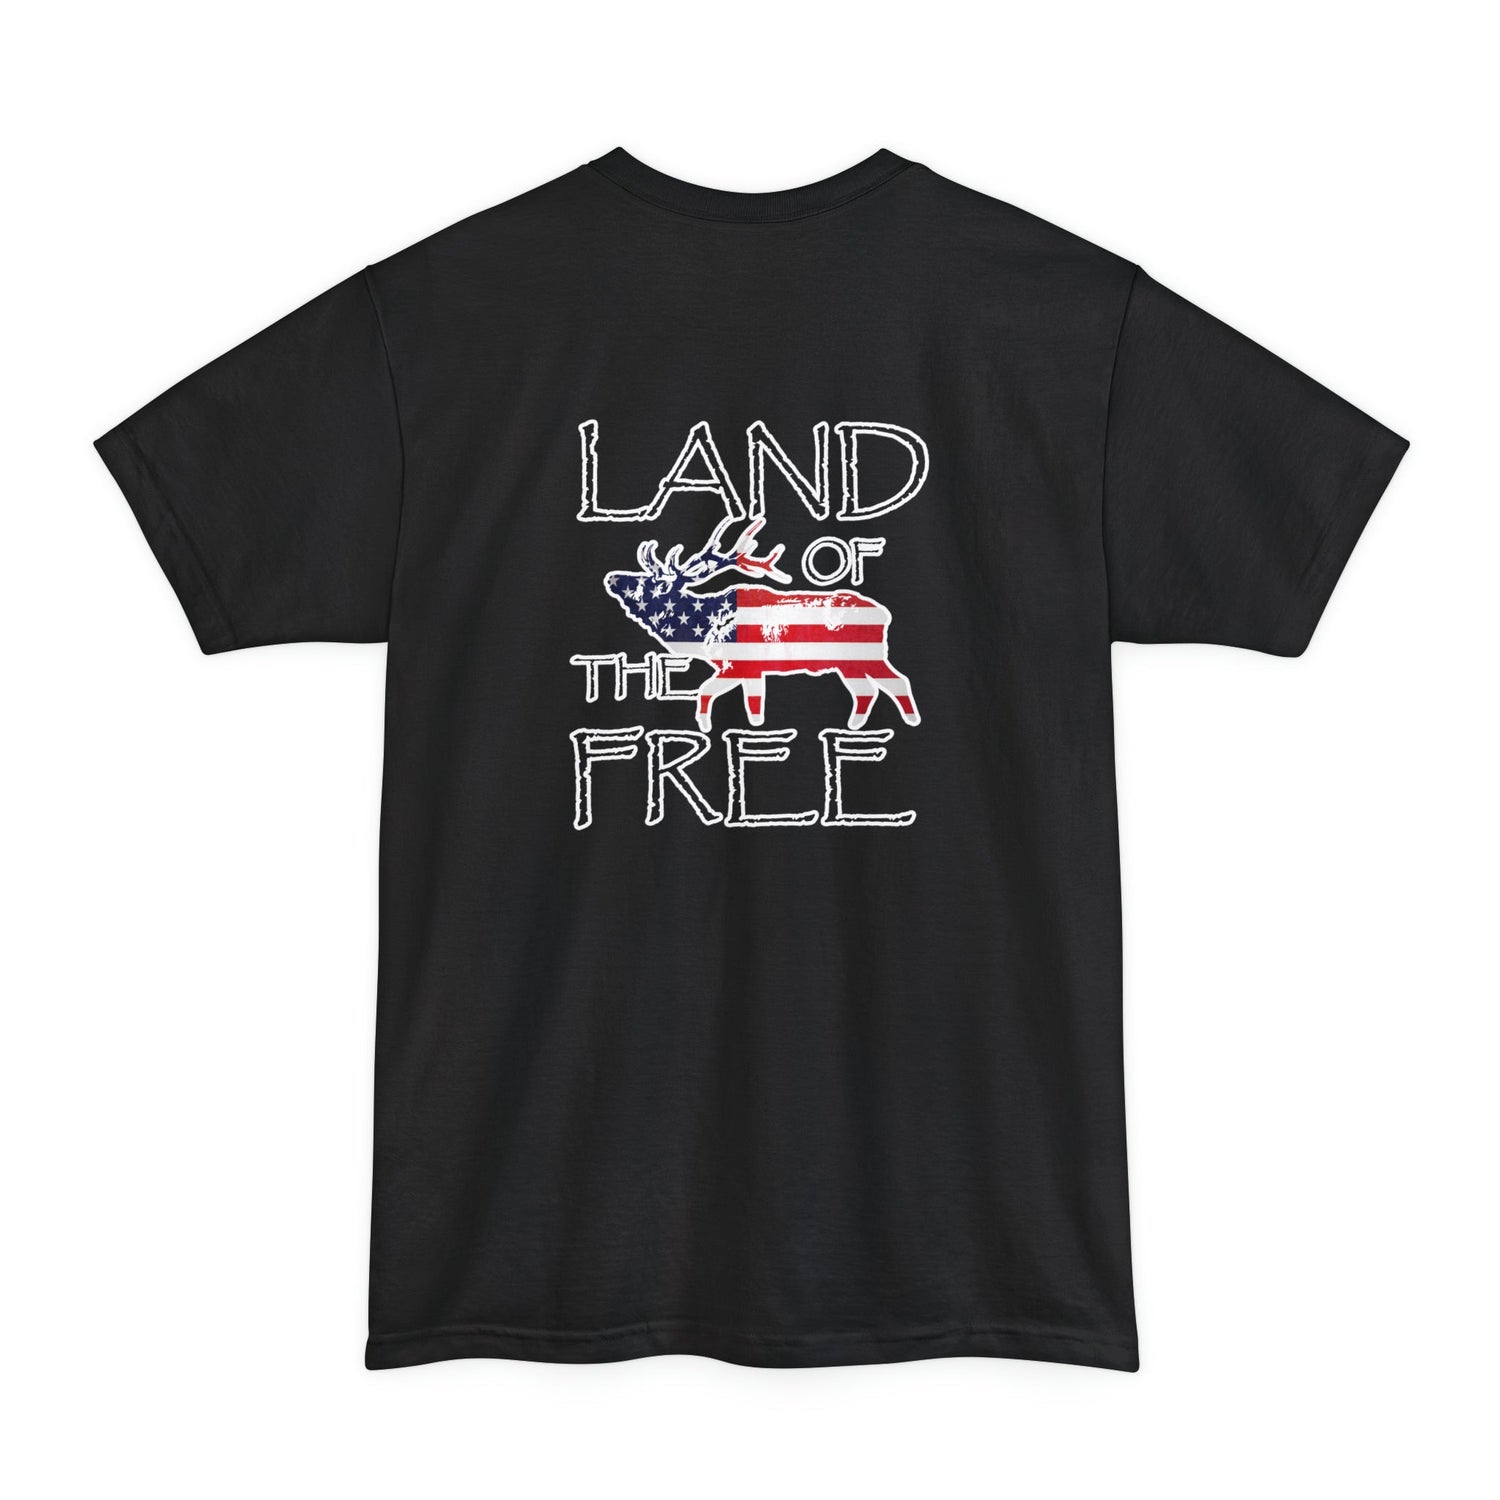 Big and tall patriotic elk hunting t-shirt, color black, back design placement